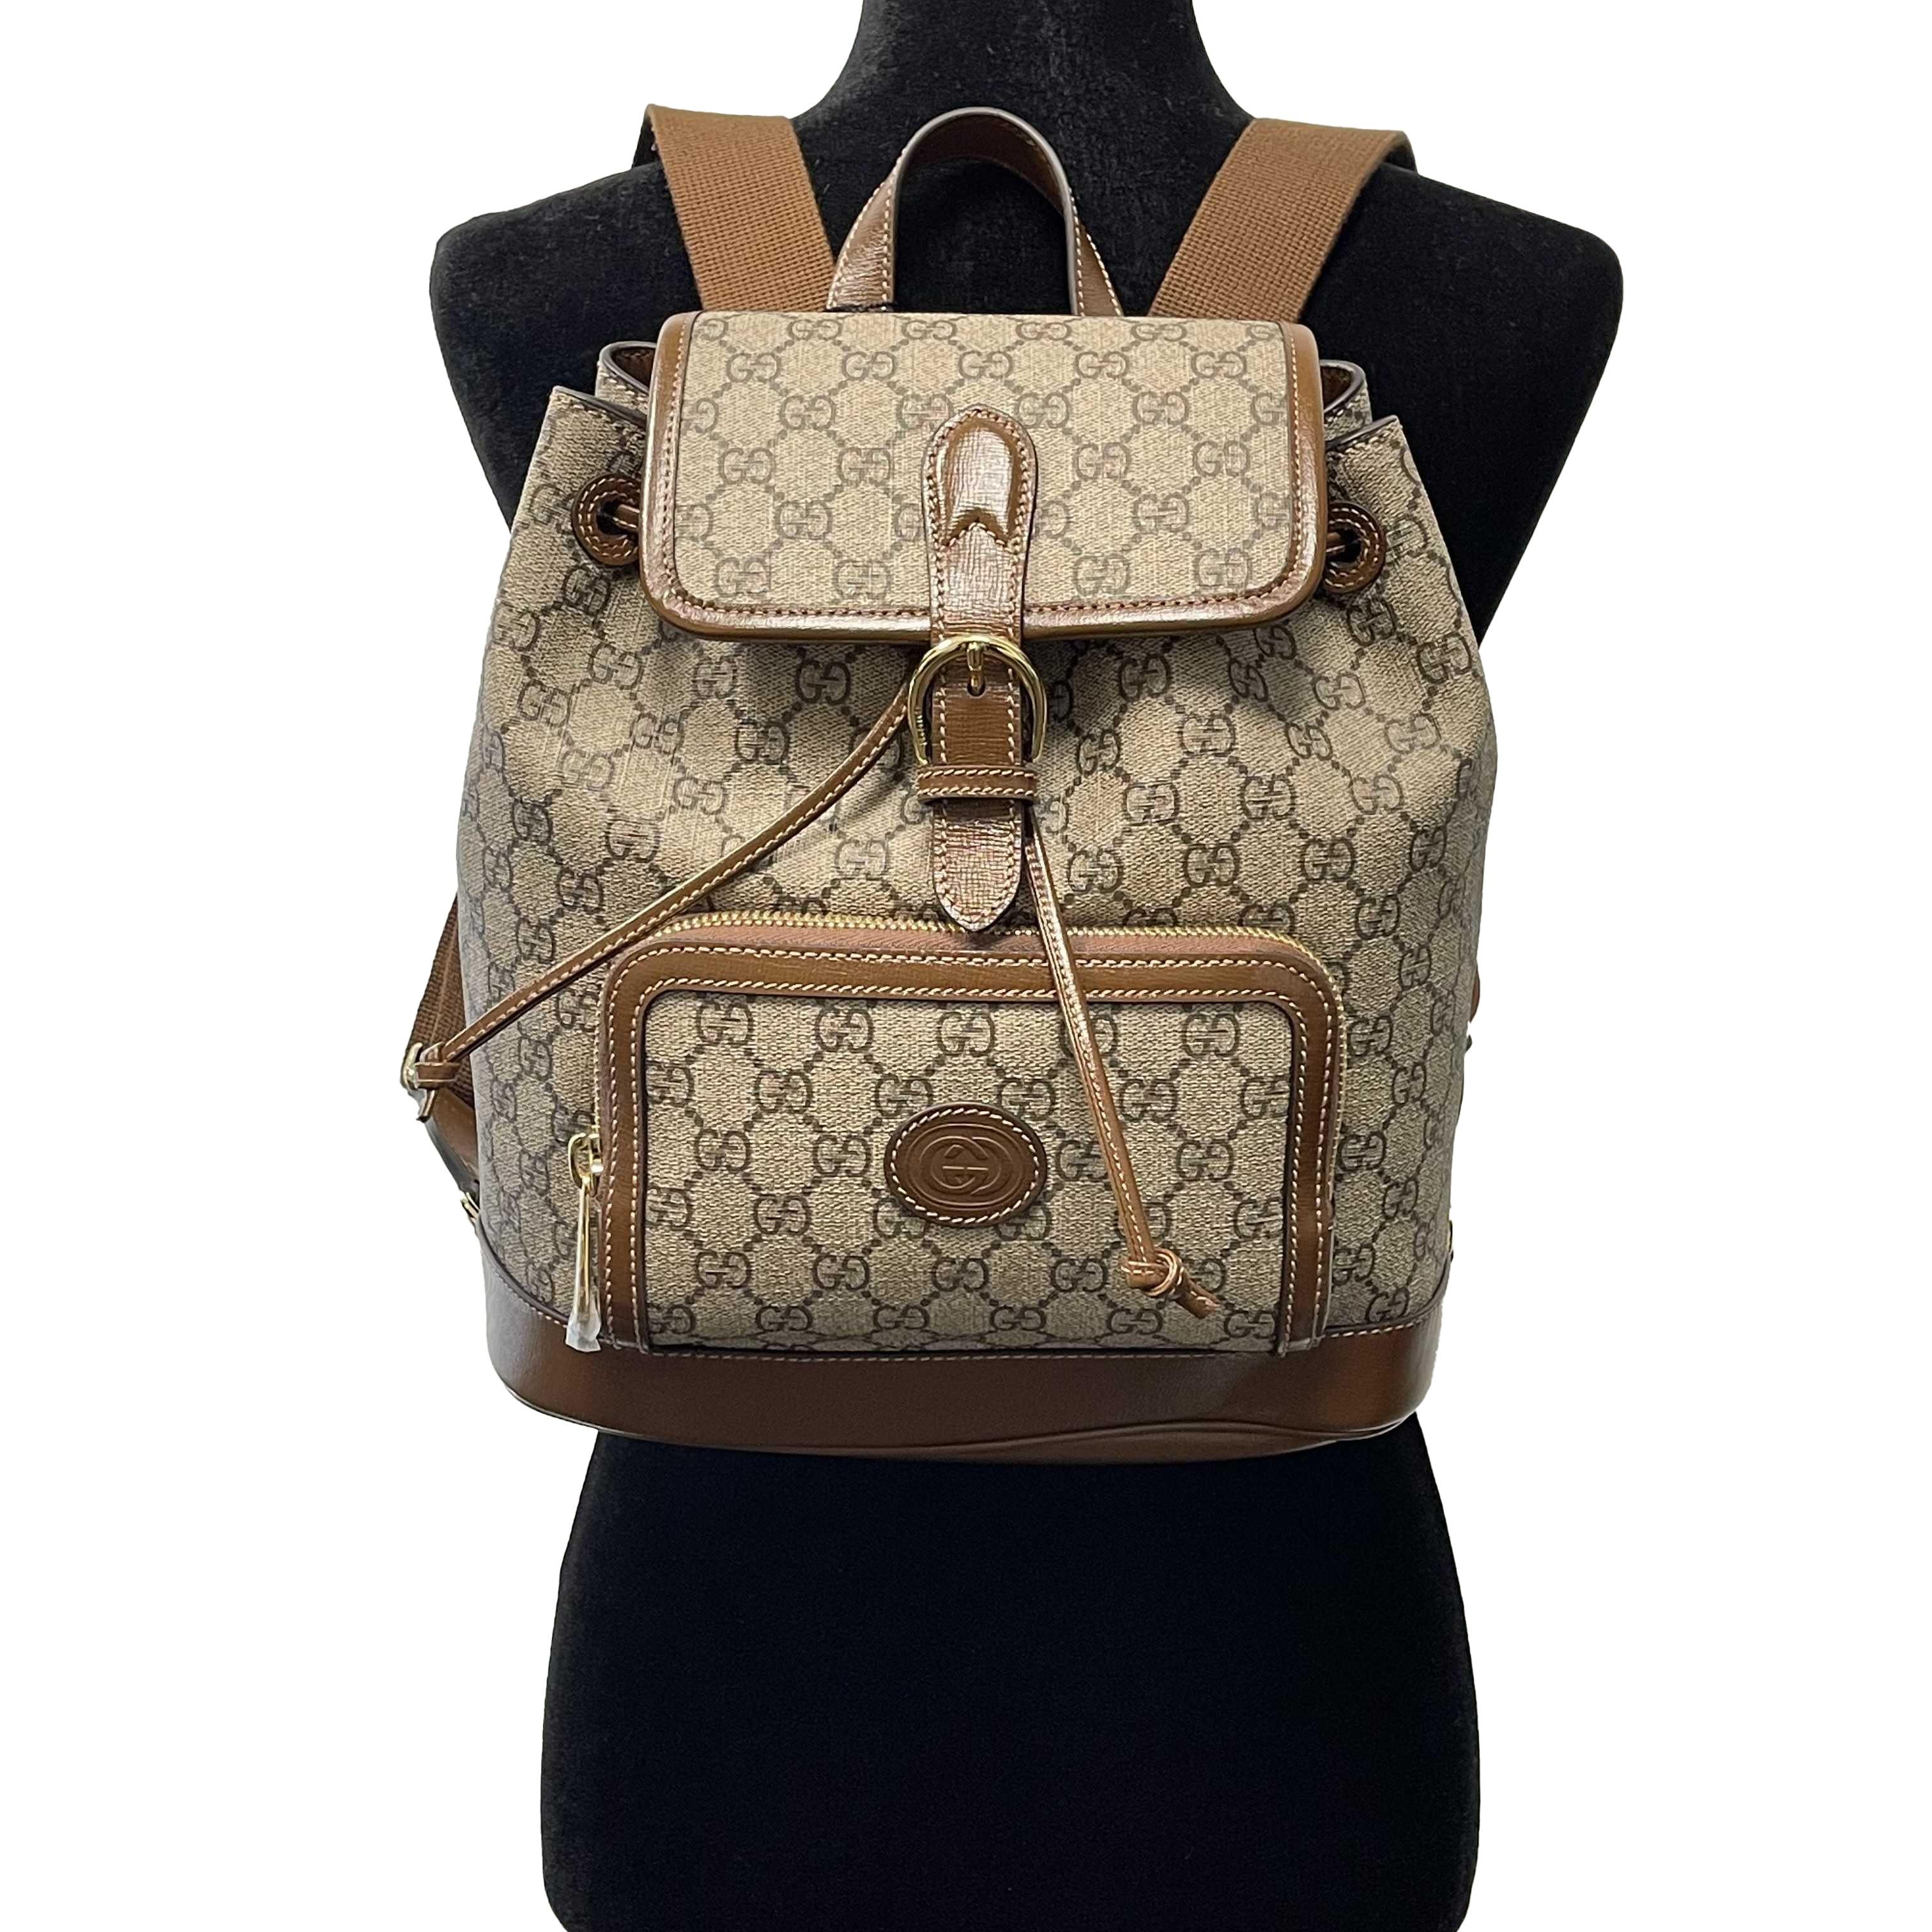 Gucci - NEW Backpack With Interlocking G - Beige / Brown Monogram Backpack 3